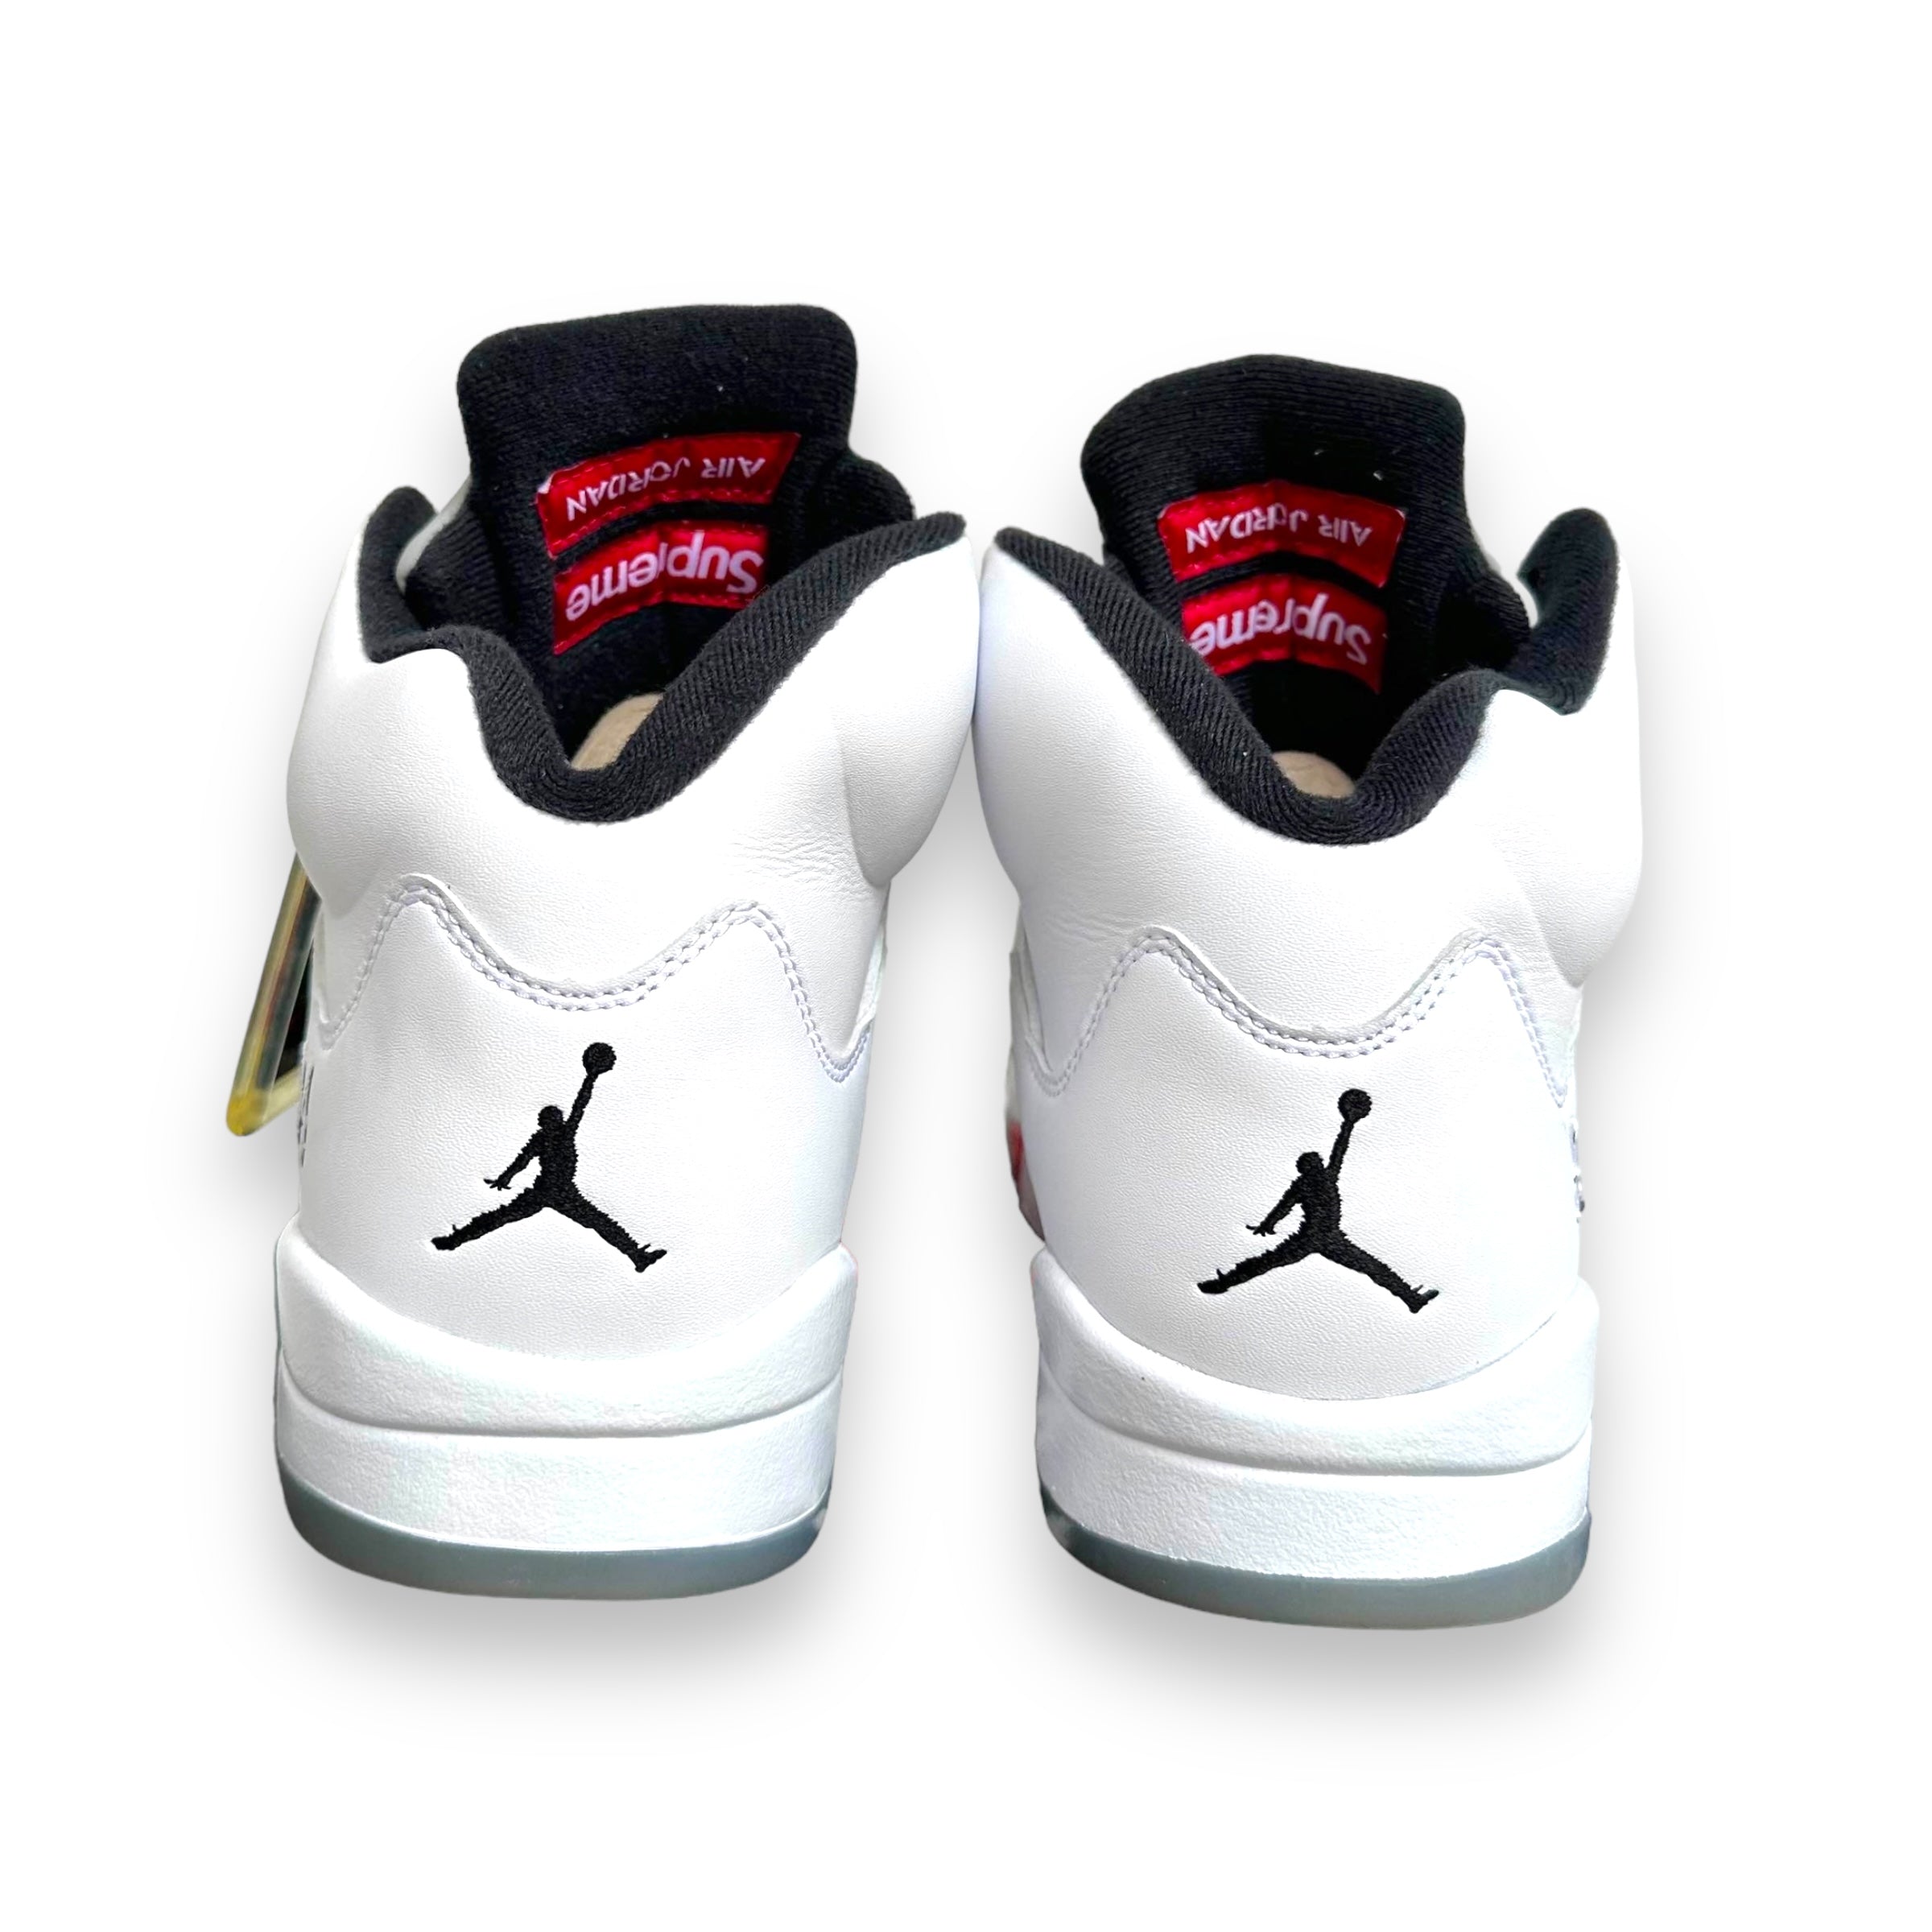 Jordan 5 Retro Supreme White